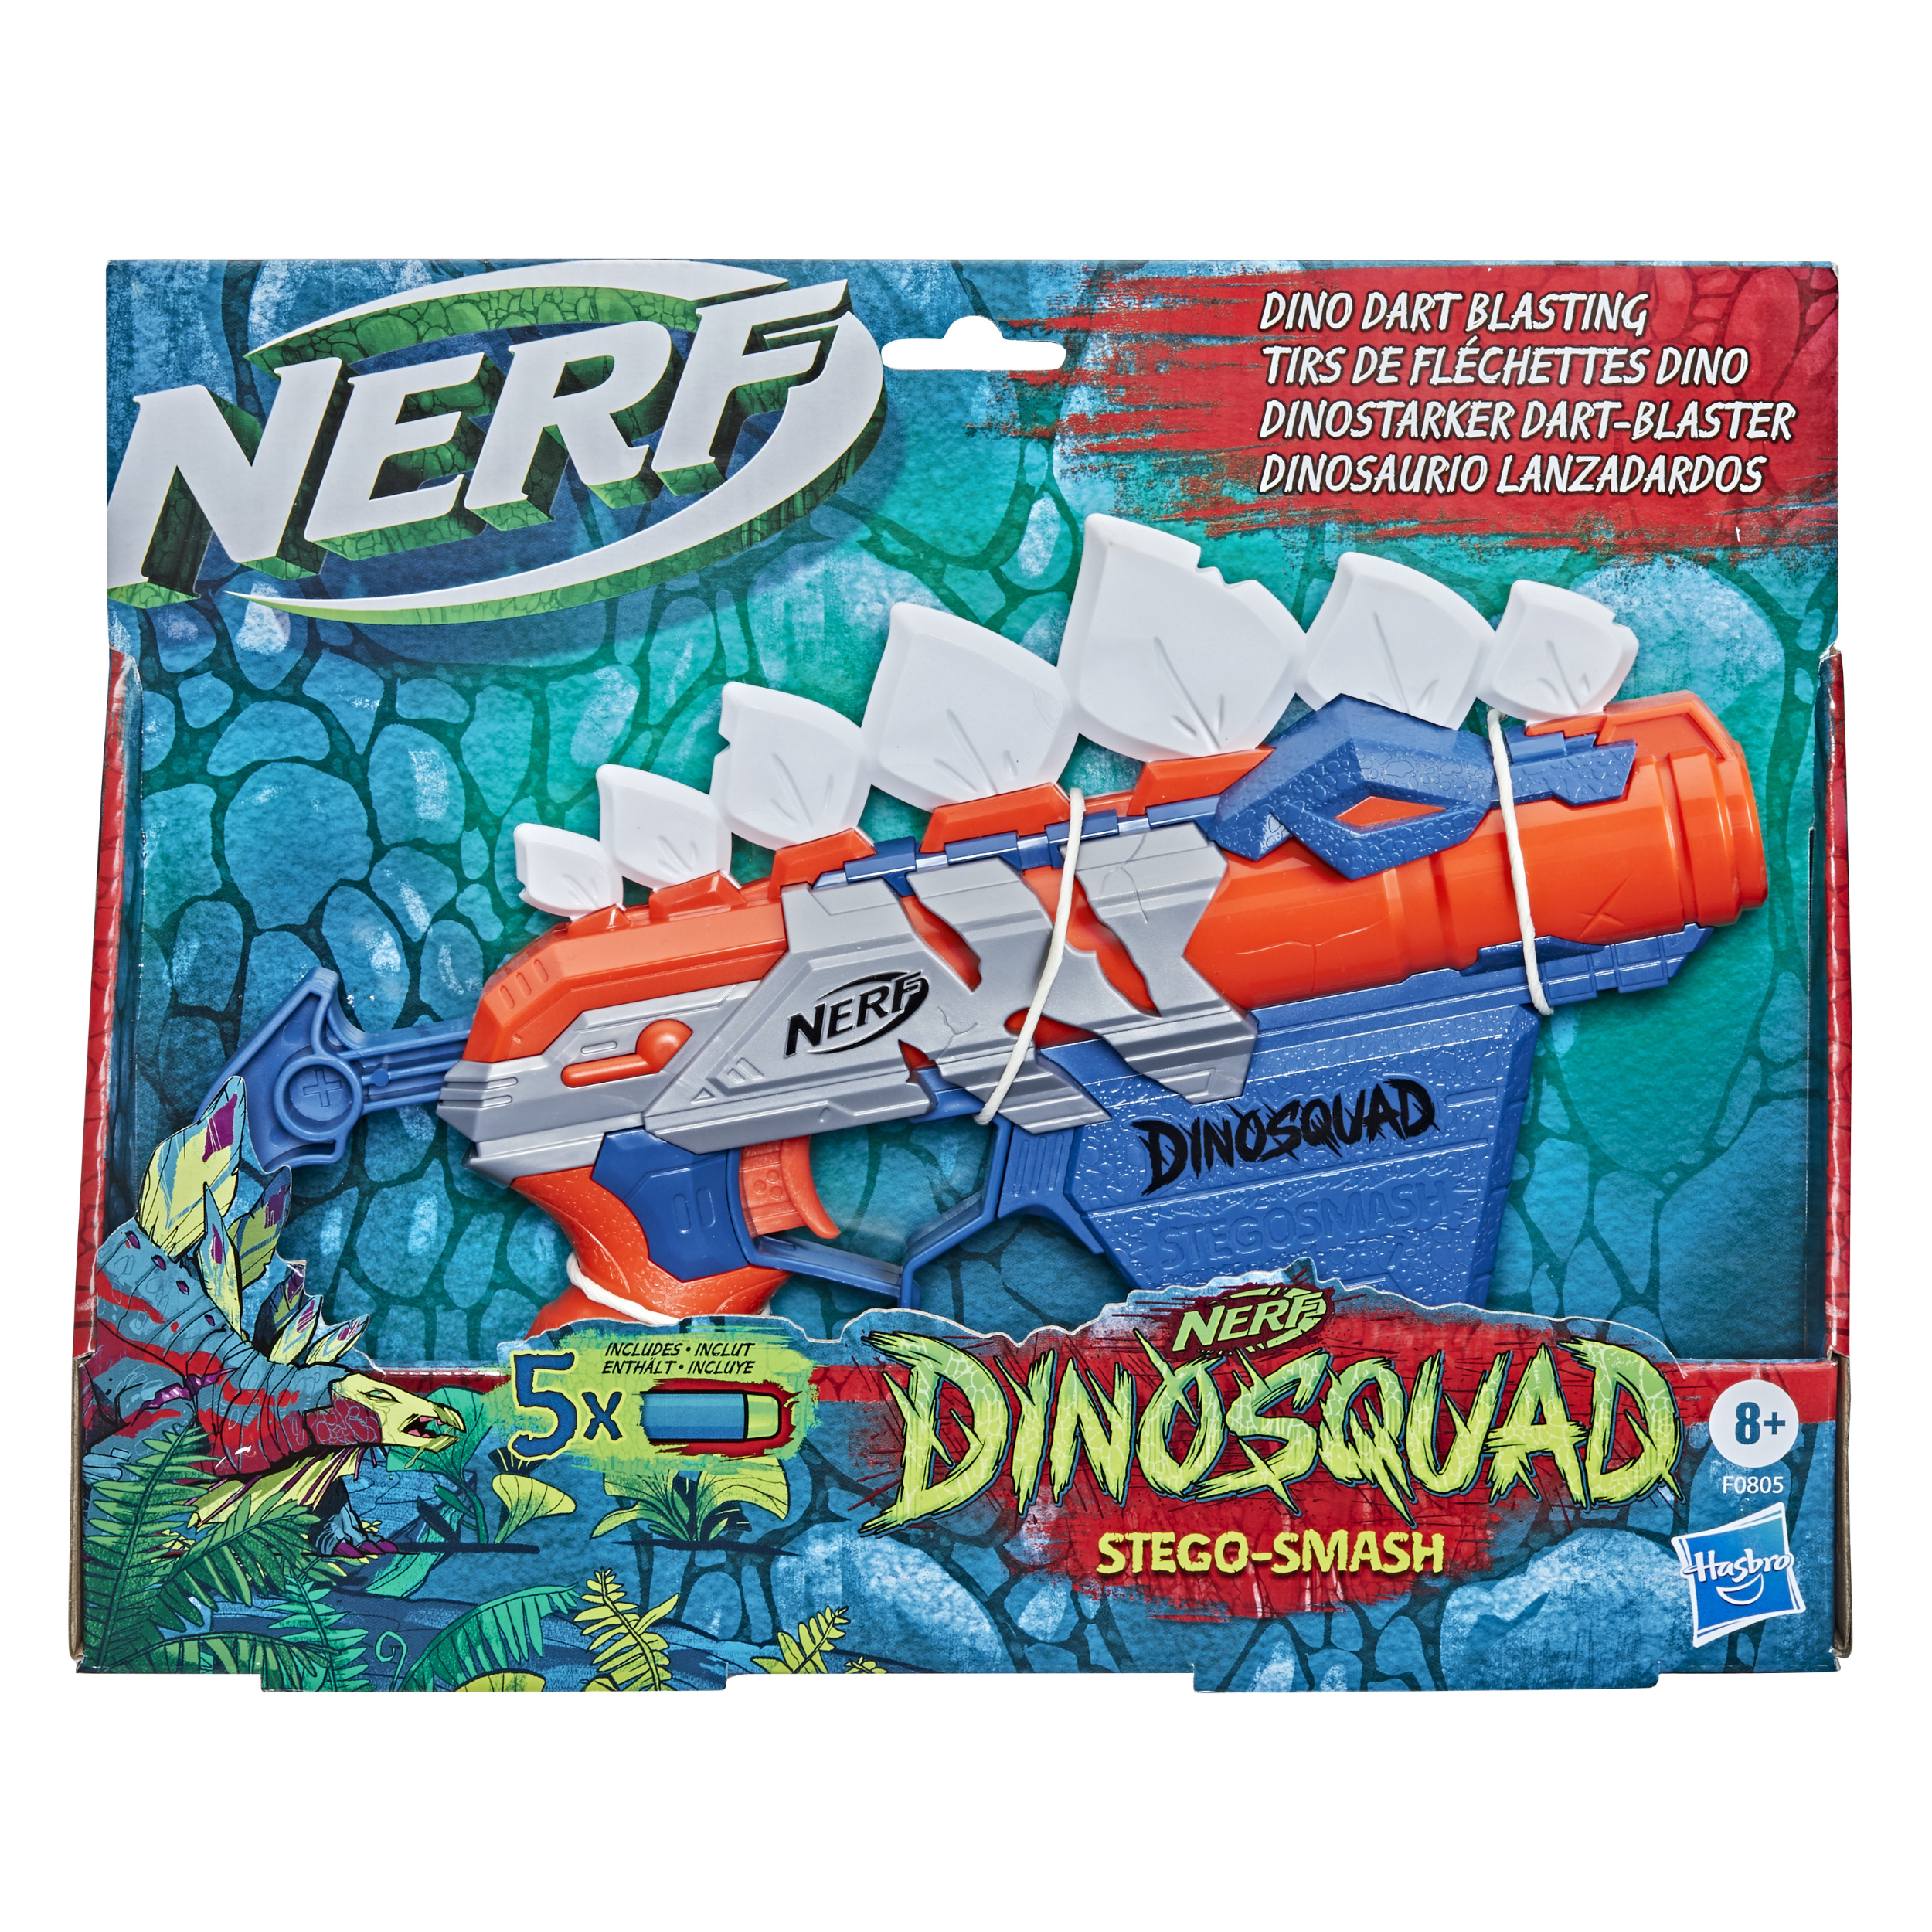 NERF DinoSquad Stegosmash Dart Blaster, 4-Dart Storage, 5 Official Nerf Darts, Dinosaur Design, Stegosaurus Spikes - Mod: HSBF0805EU4